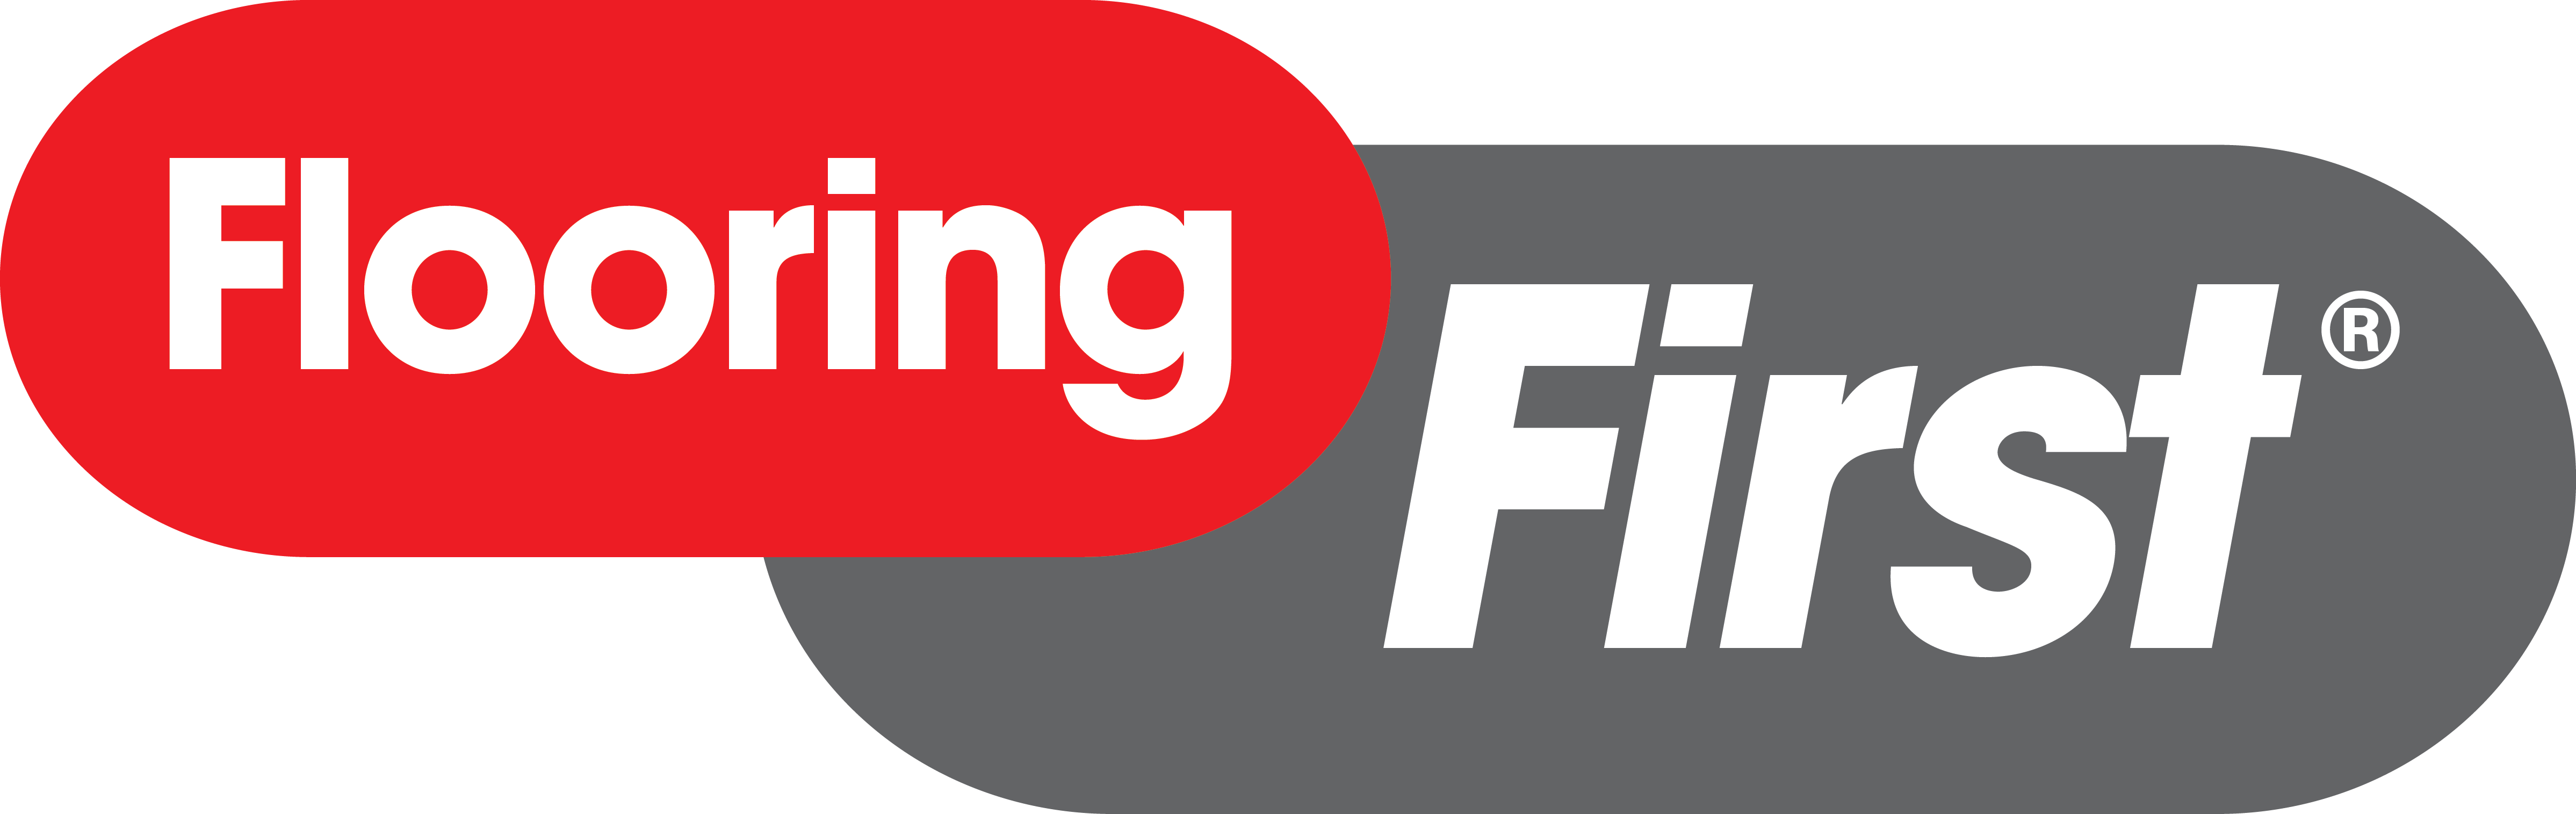 Flooring First Logo - Flooring First (4795x1515), Png Download